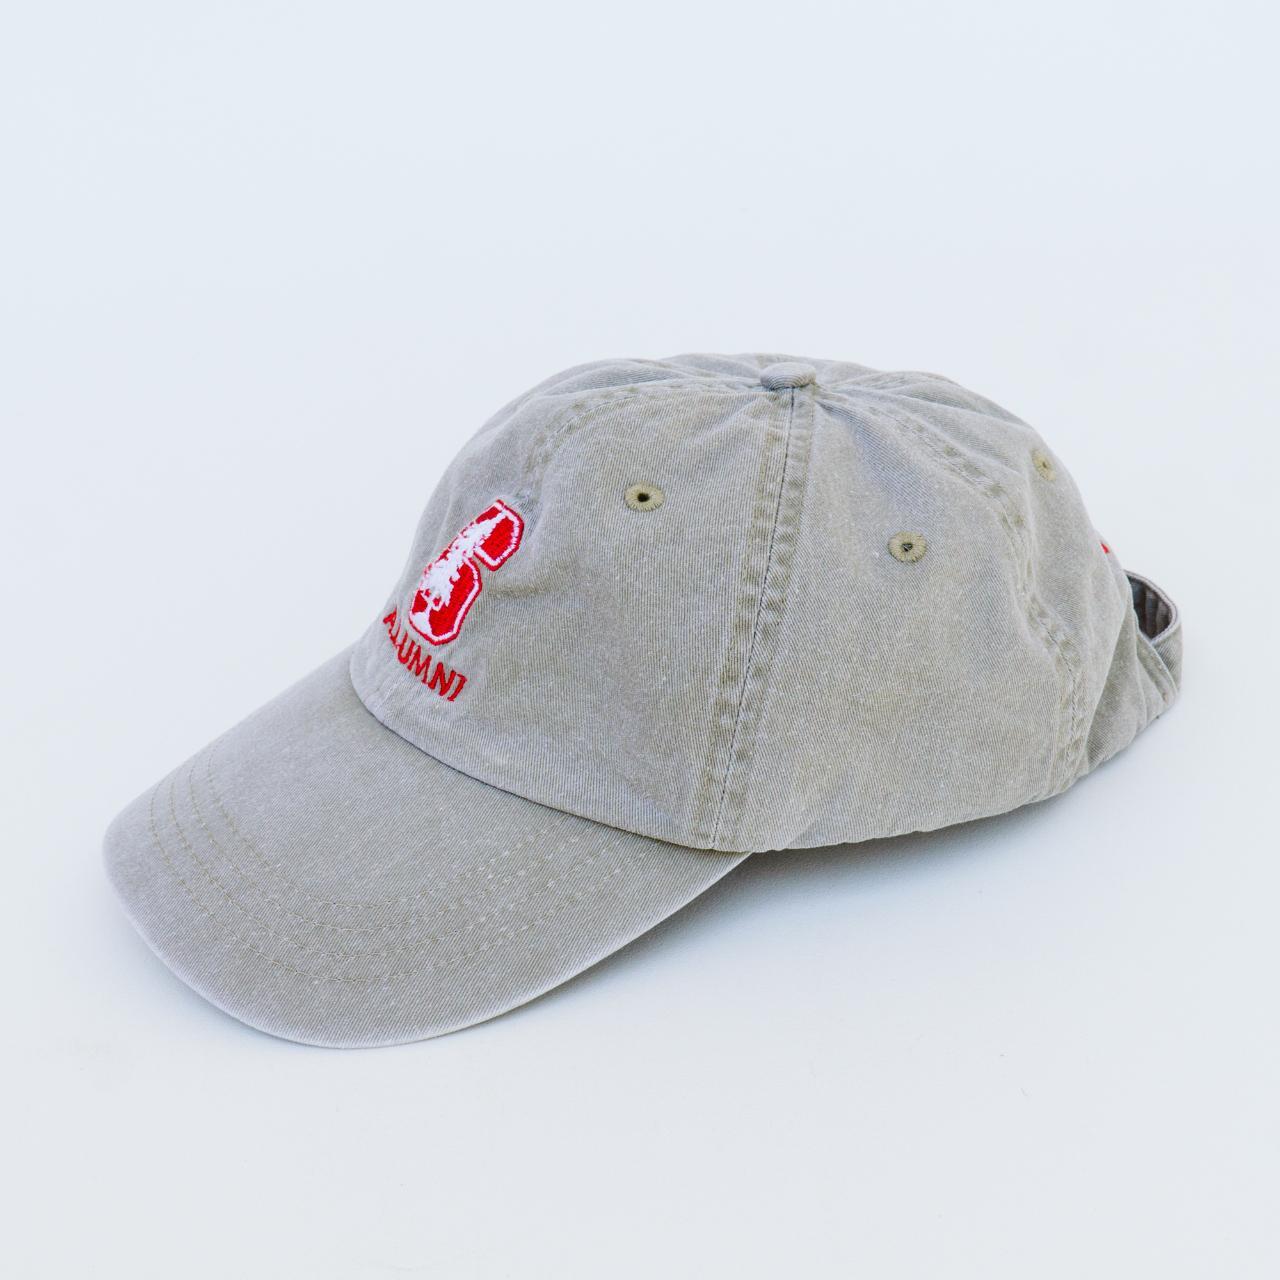 Major league baseball since 1869 brand, this cap is - Depop